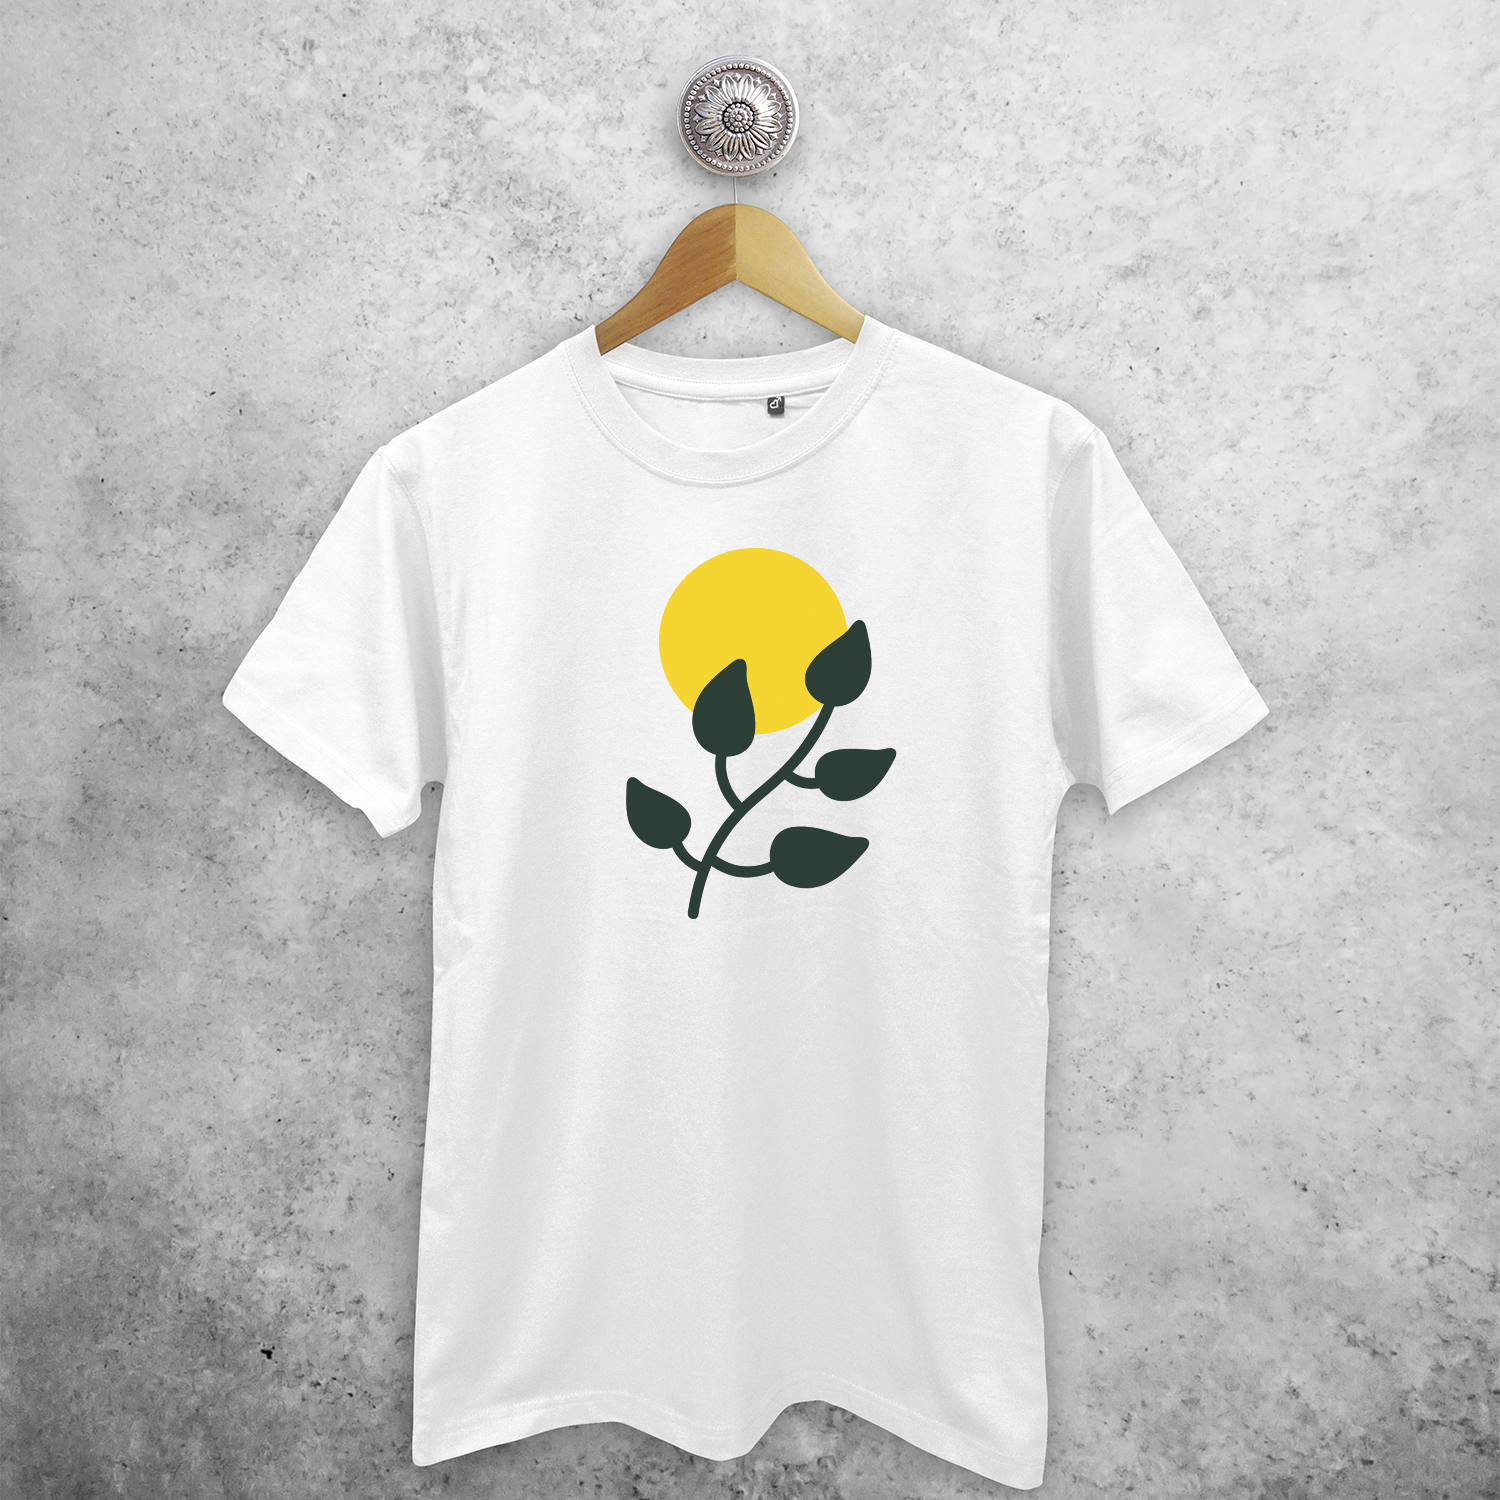 Plant and sun adult shirt